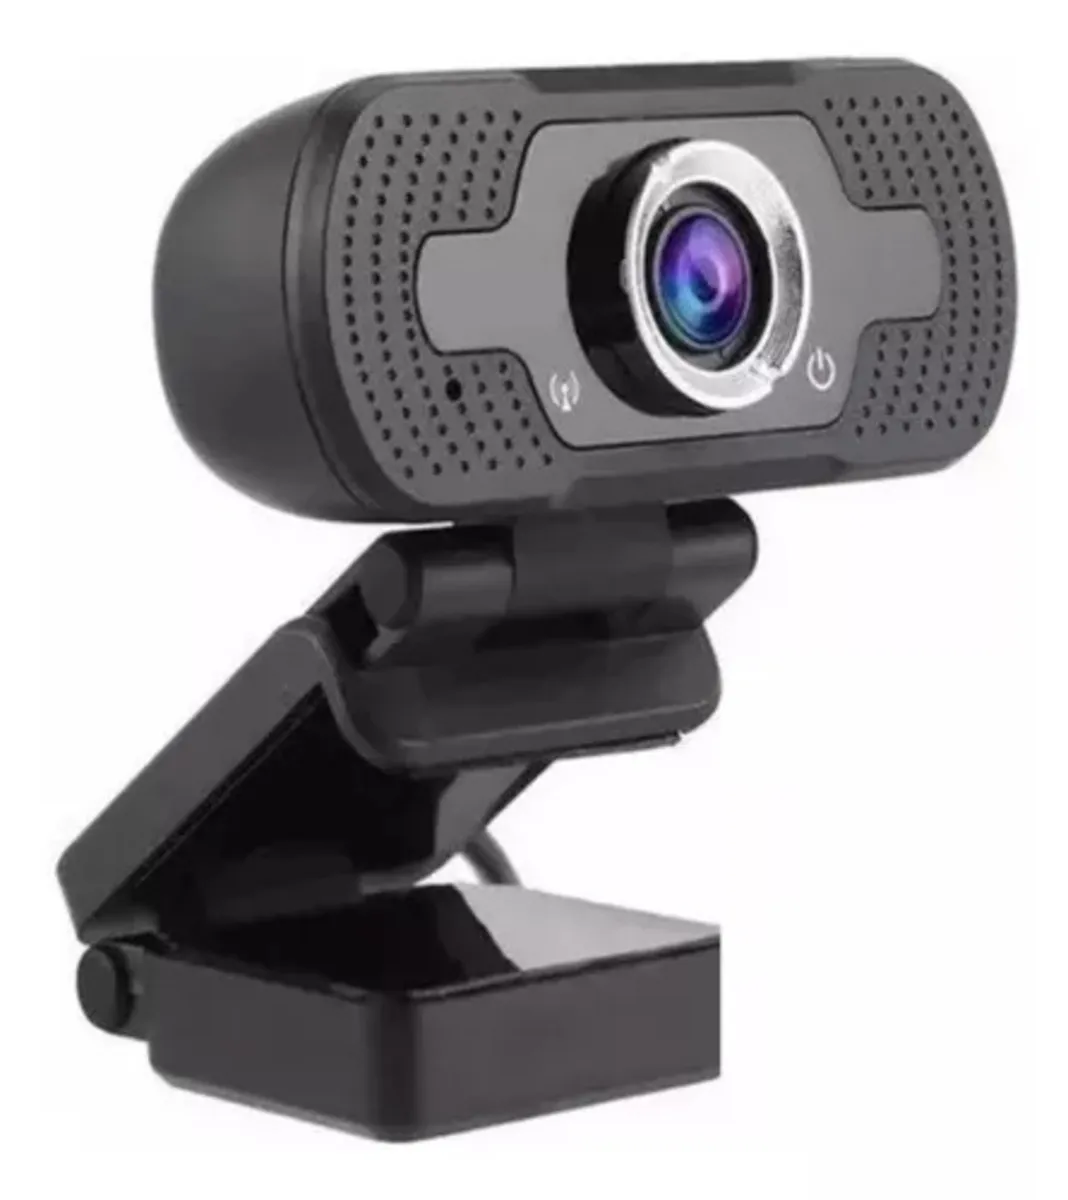 Webcam Camara Web Con Microfono Full Hd 1080 Usb Pc Notebook